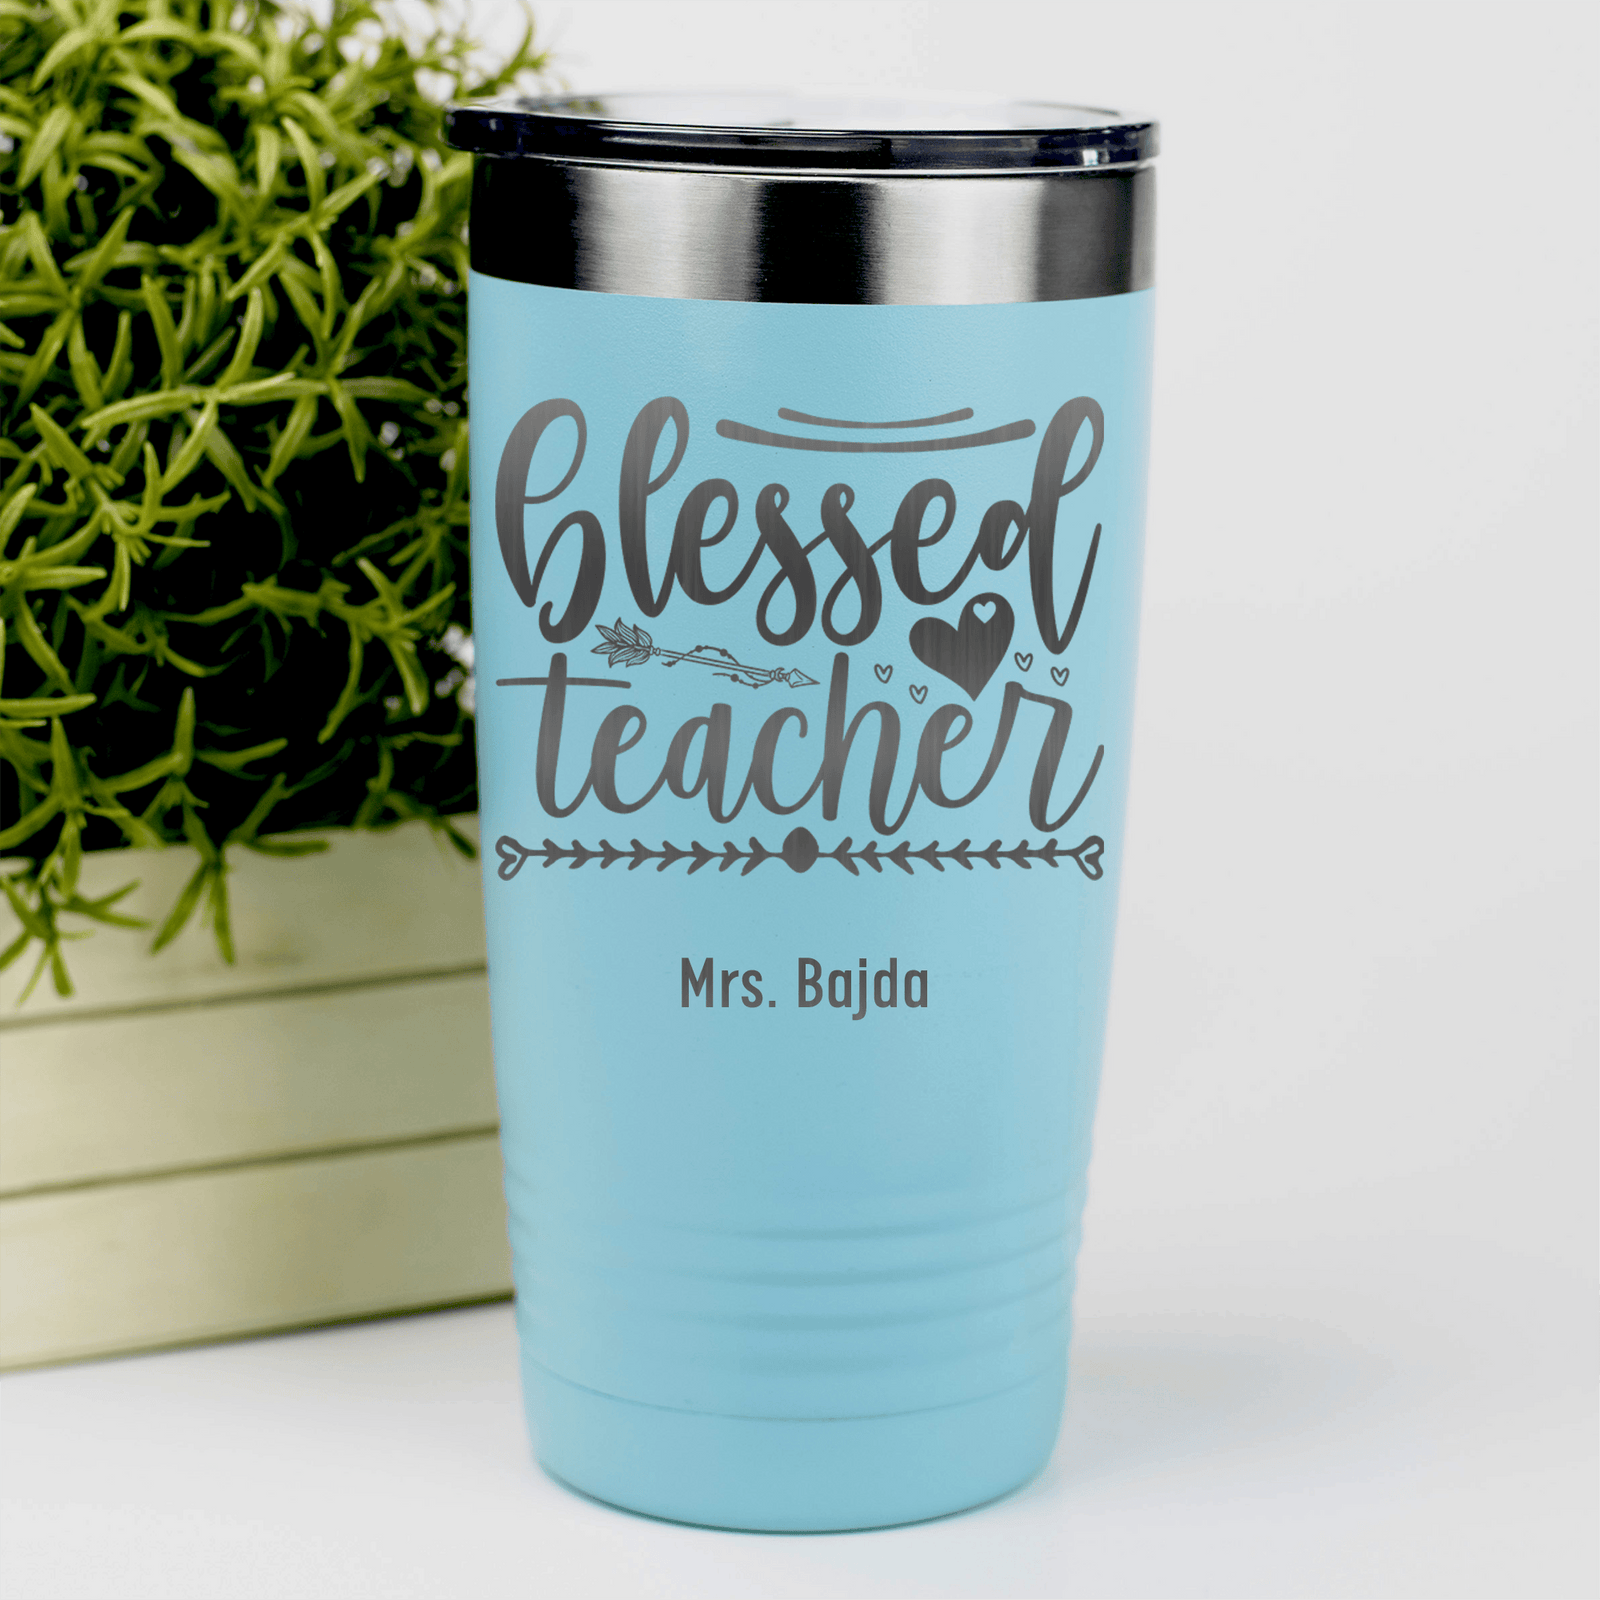 Teal Teacher Tumbler With Blessed Teacher Design